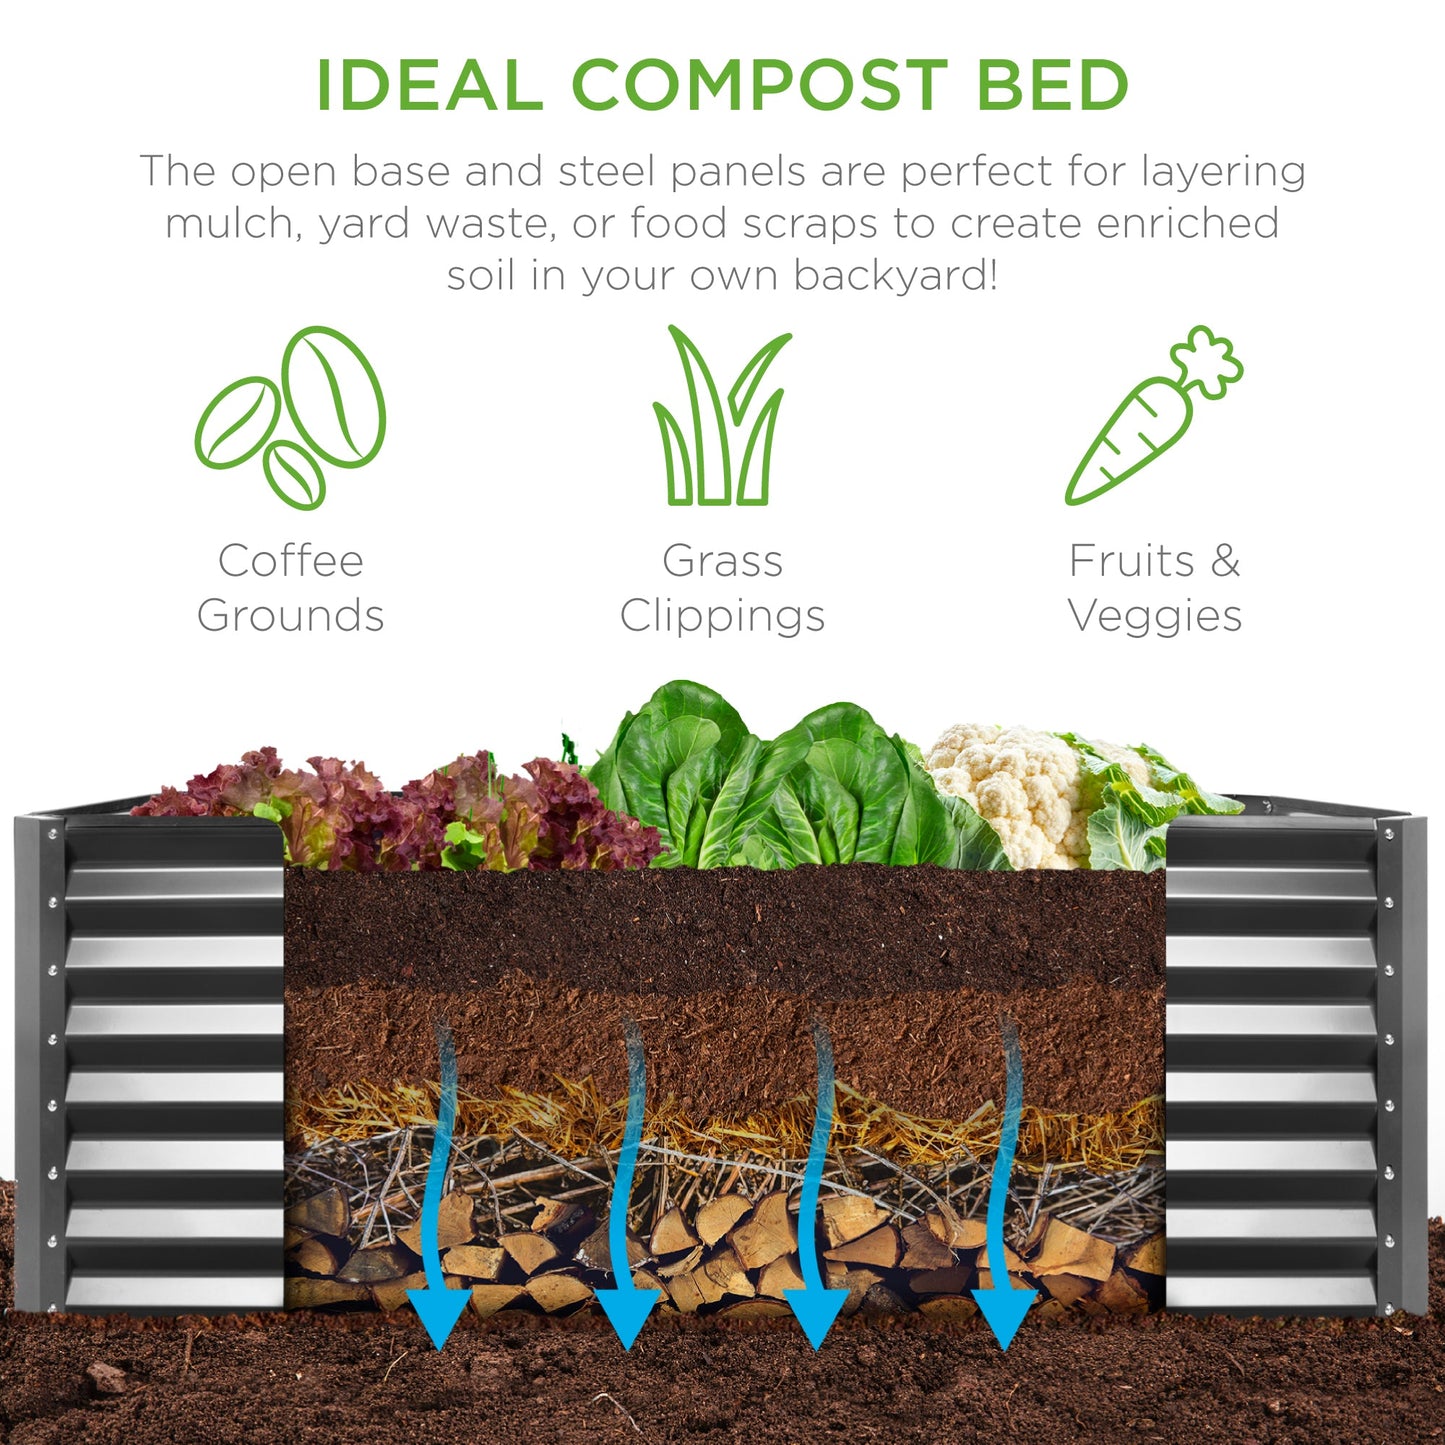 Outdoor Metal Raised Garden Bed for Vegetables, Flowers, Herbs - 6x3x2ft